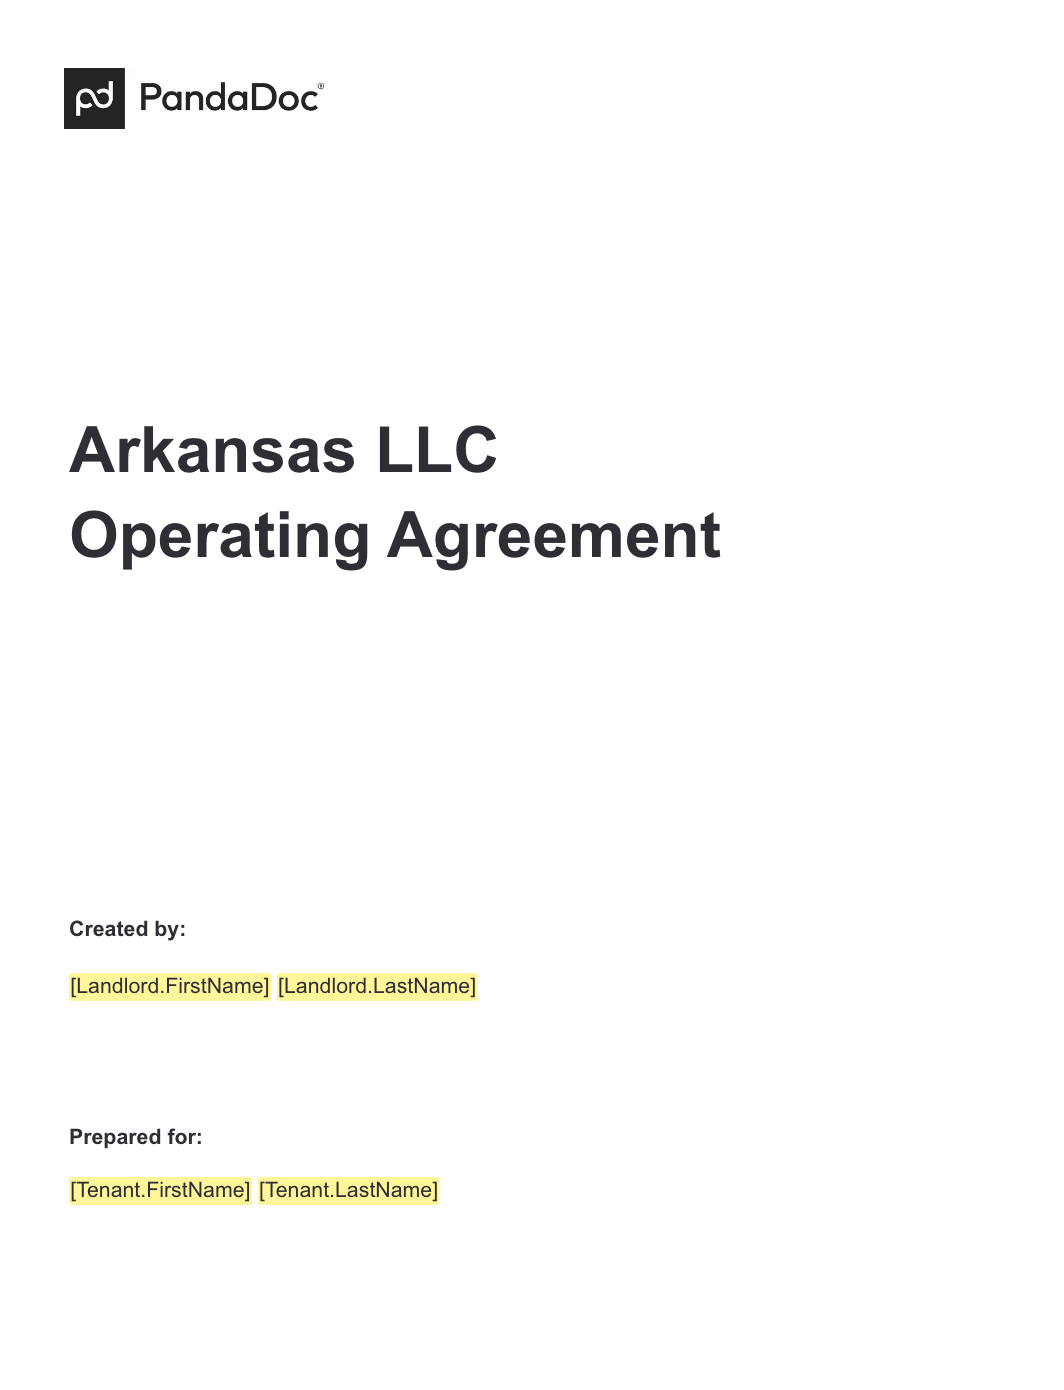 Arkansas LLC Operating Agreement 